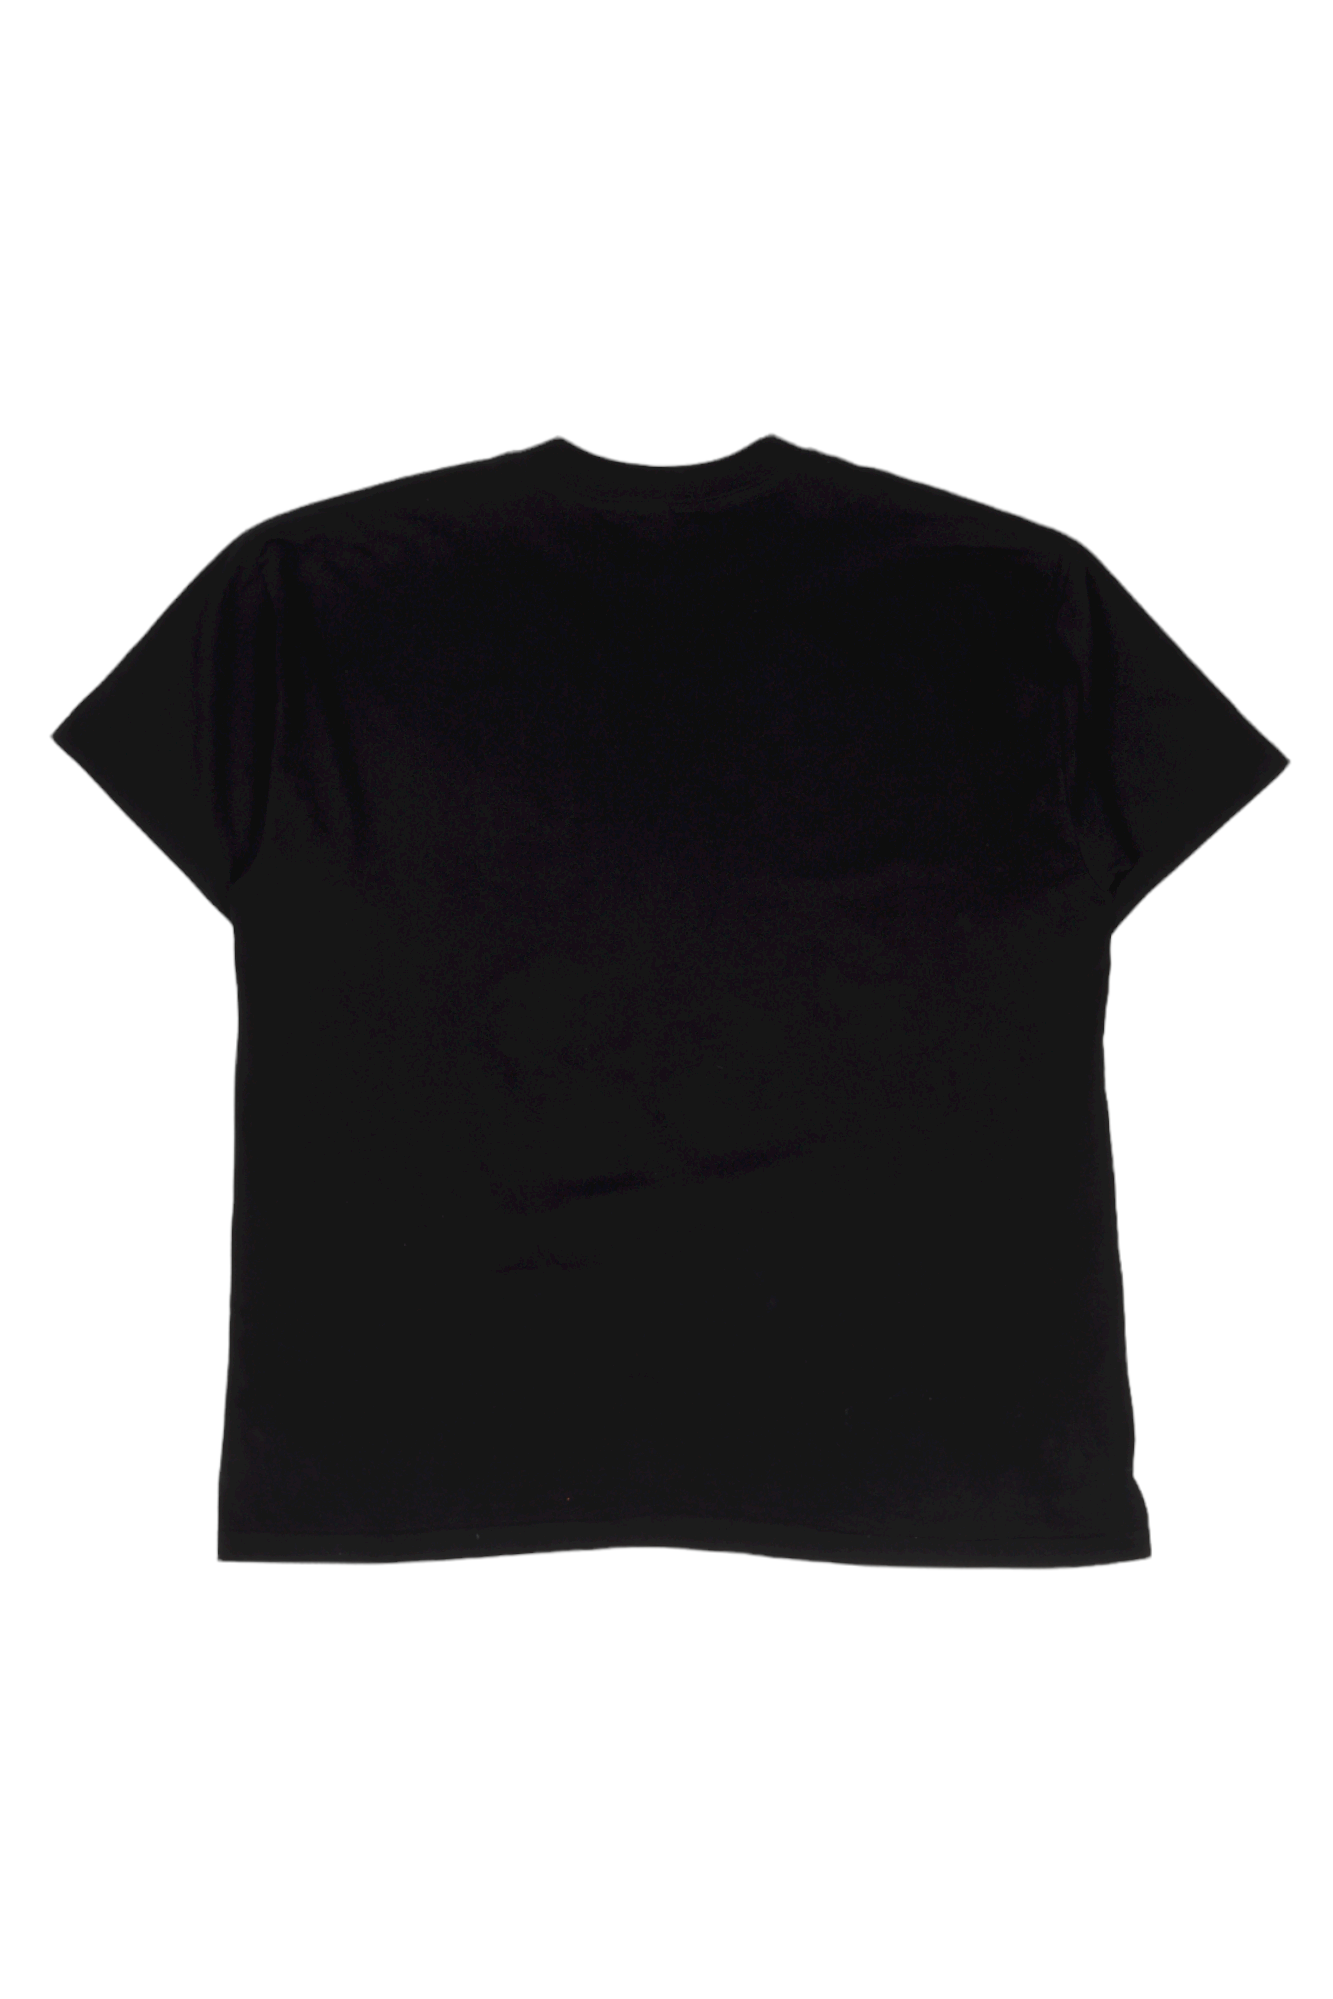 World Order Dennis Rodman T-Shirt